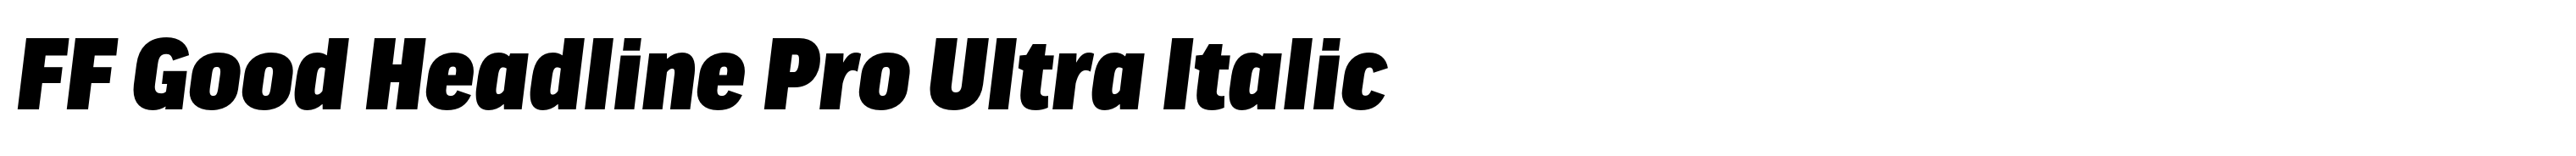 FF Good Headline Pro Ultra Italic